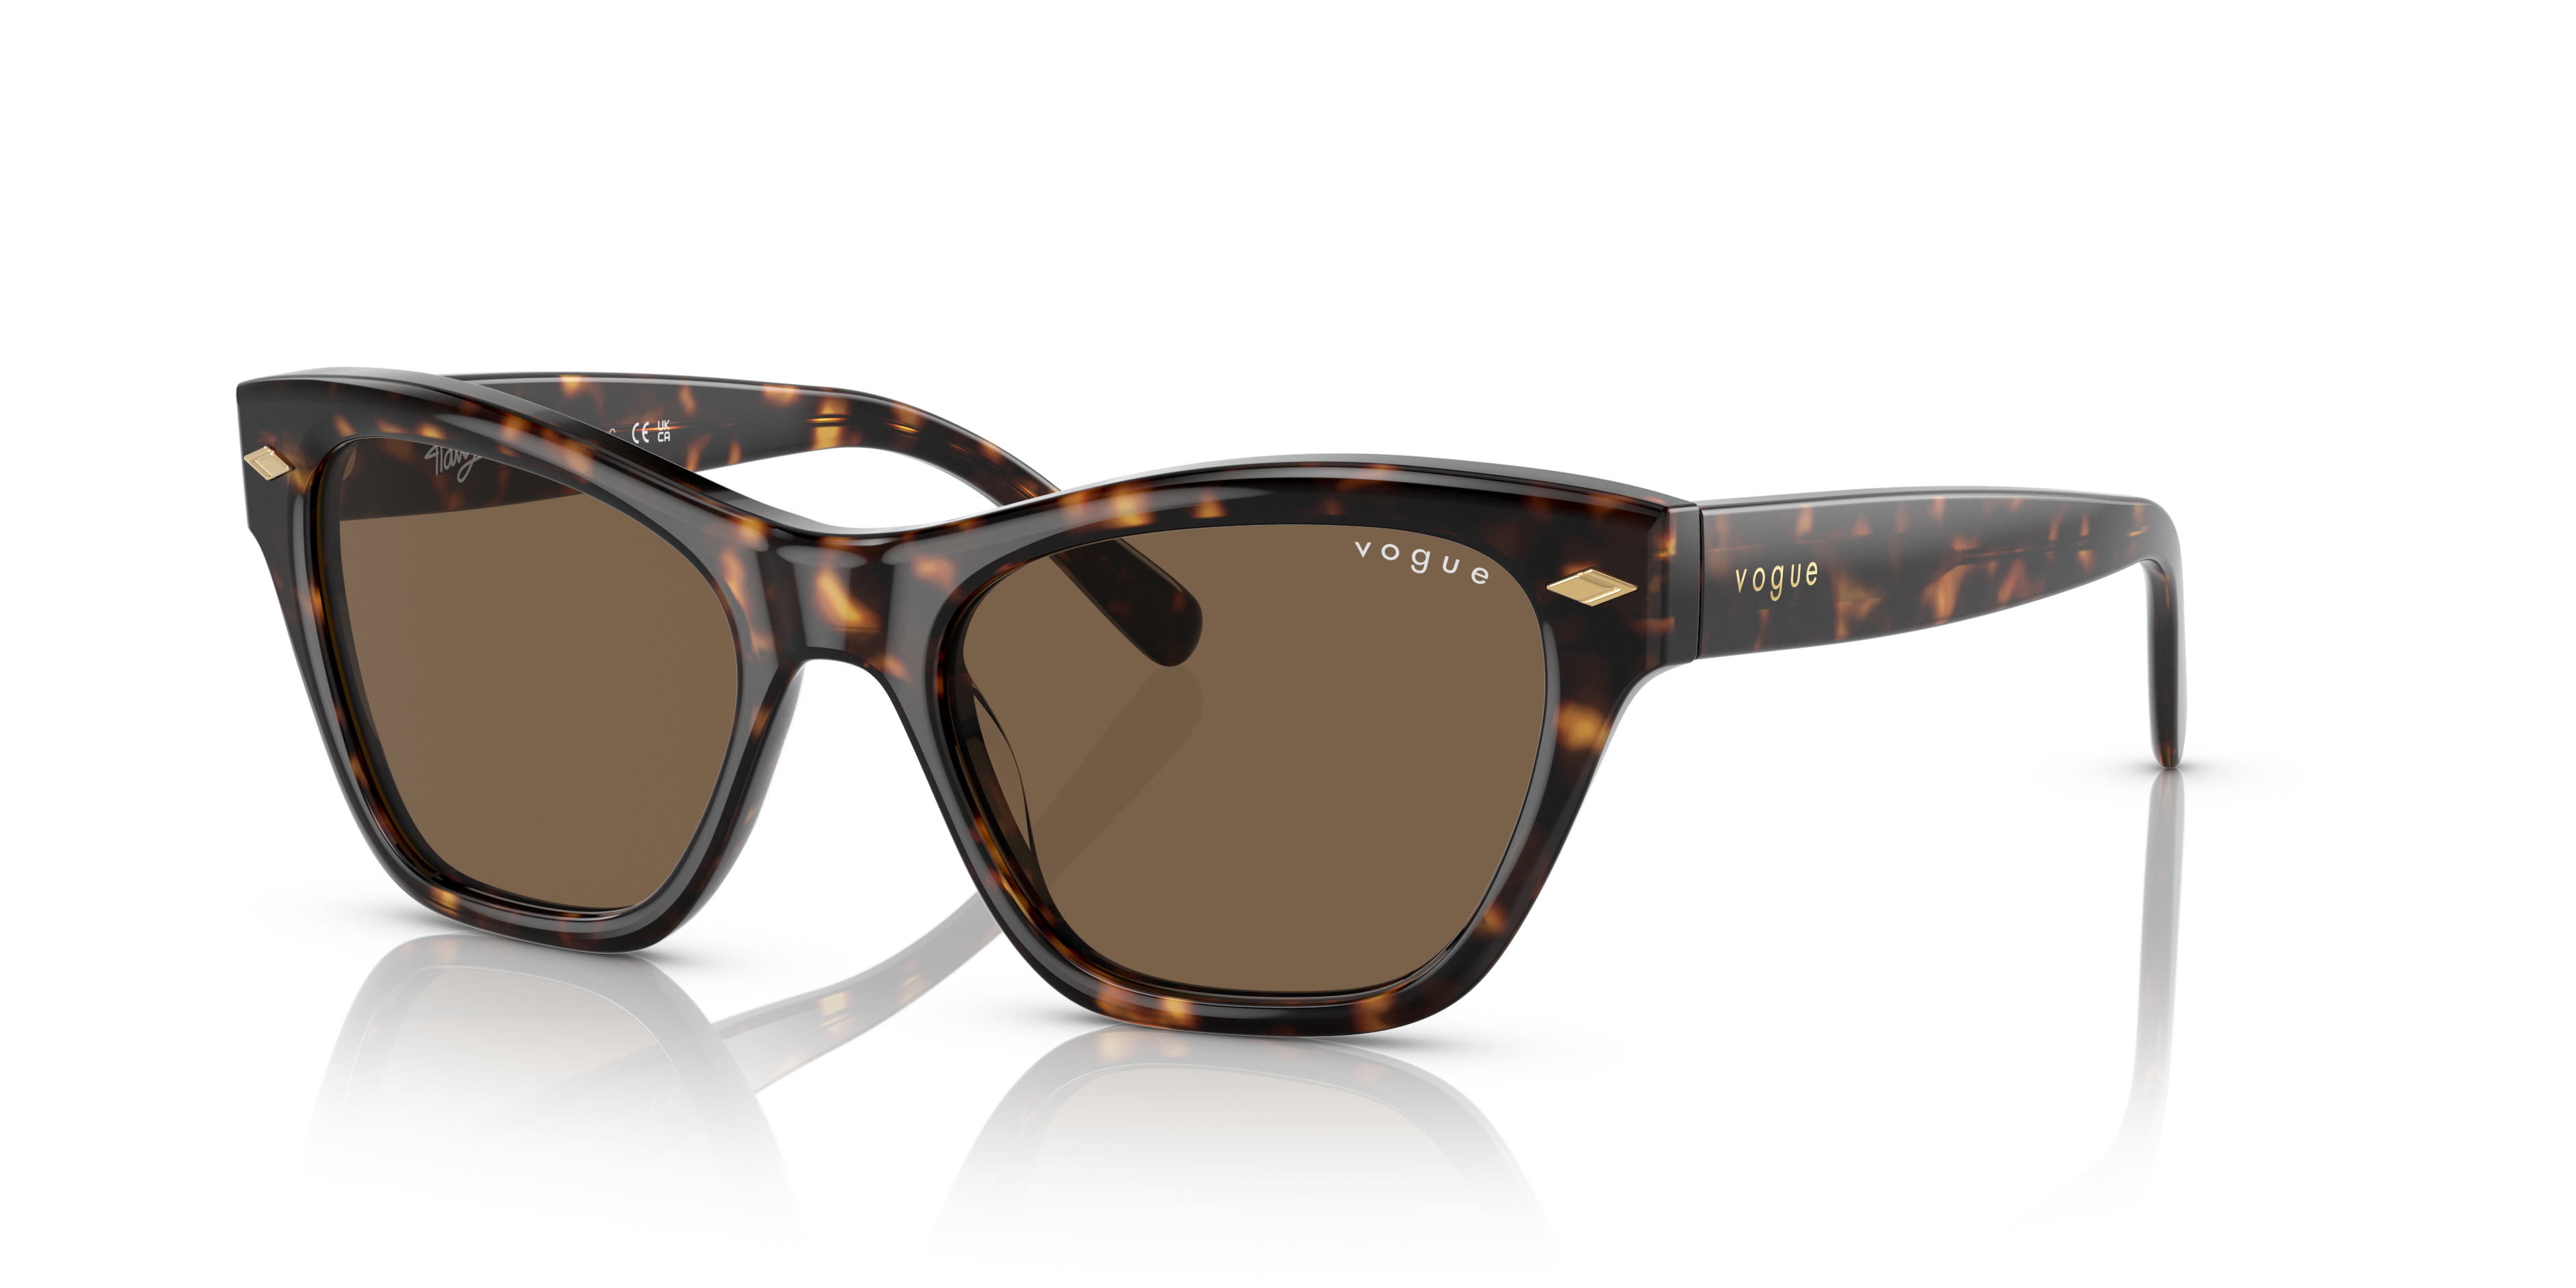 Sunglass Hut Collection HU1008 01 Grey-Black & Silver Sunglasses | Sunglass  Hut USA